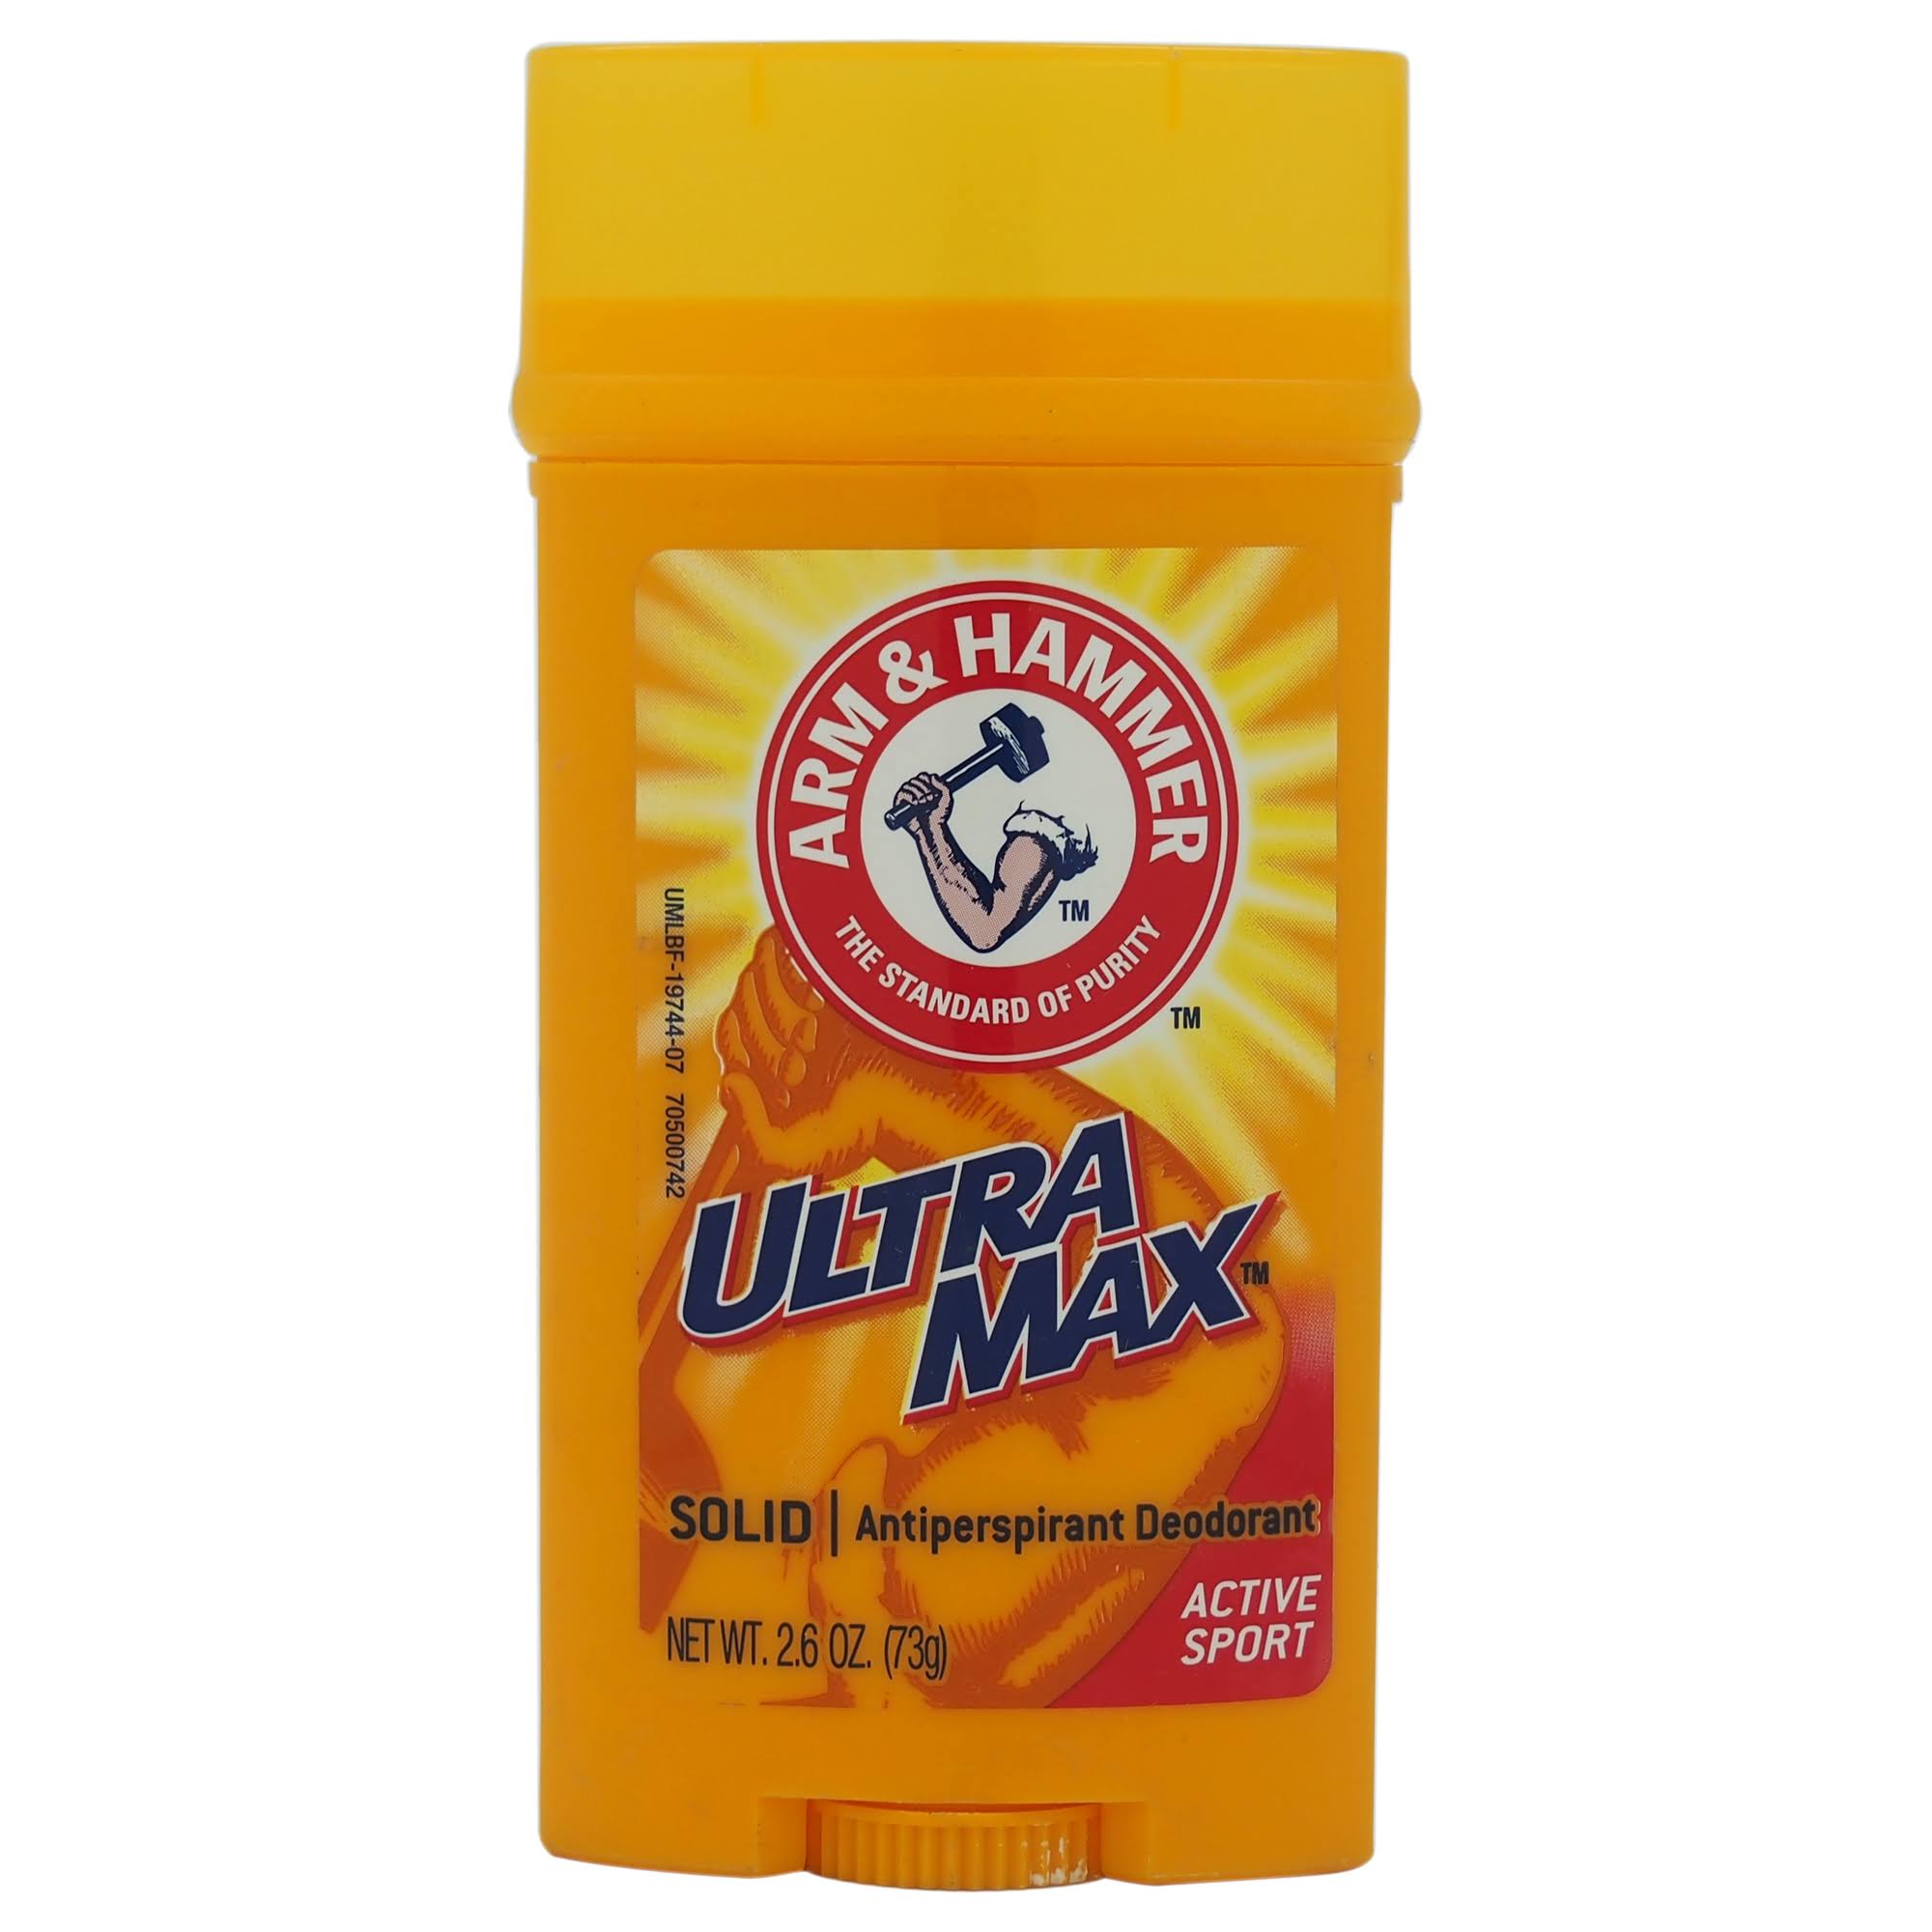 Arm & Hammer Ultra Max Antiperspirant & Deodorant - Active Sport, 2.6oz